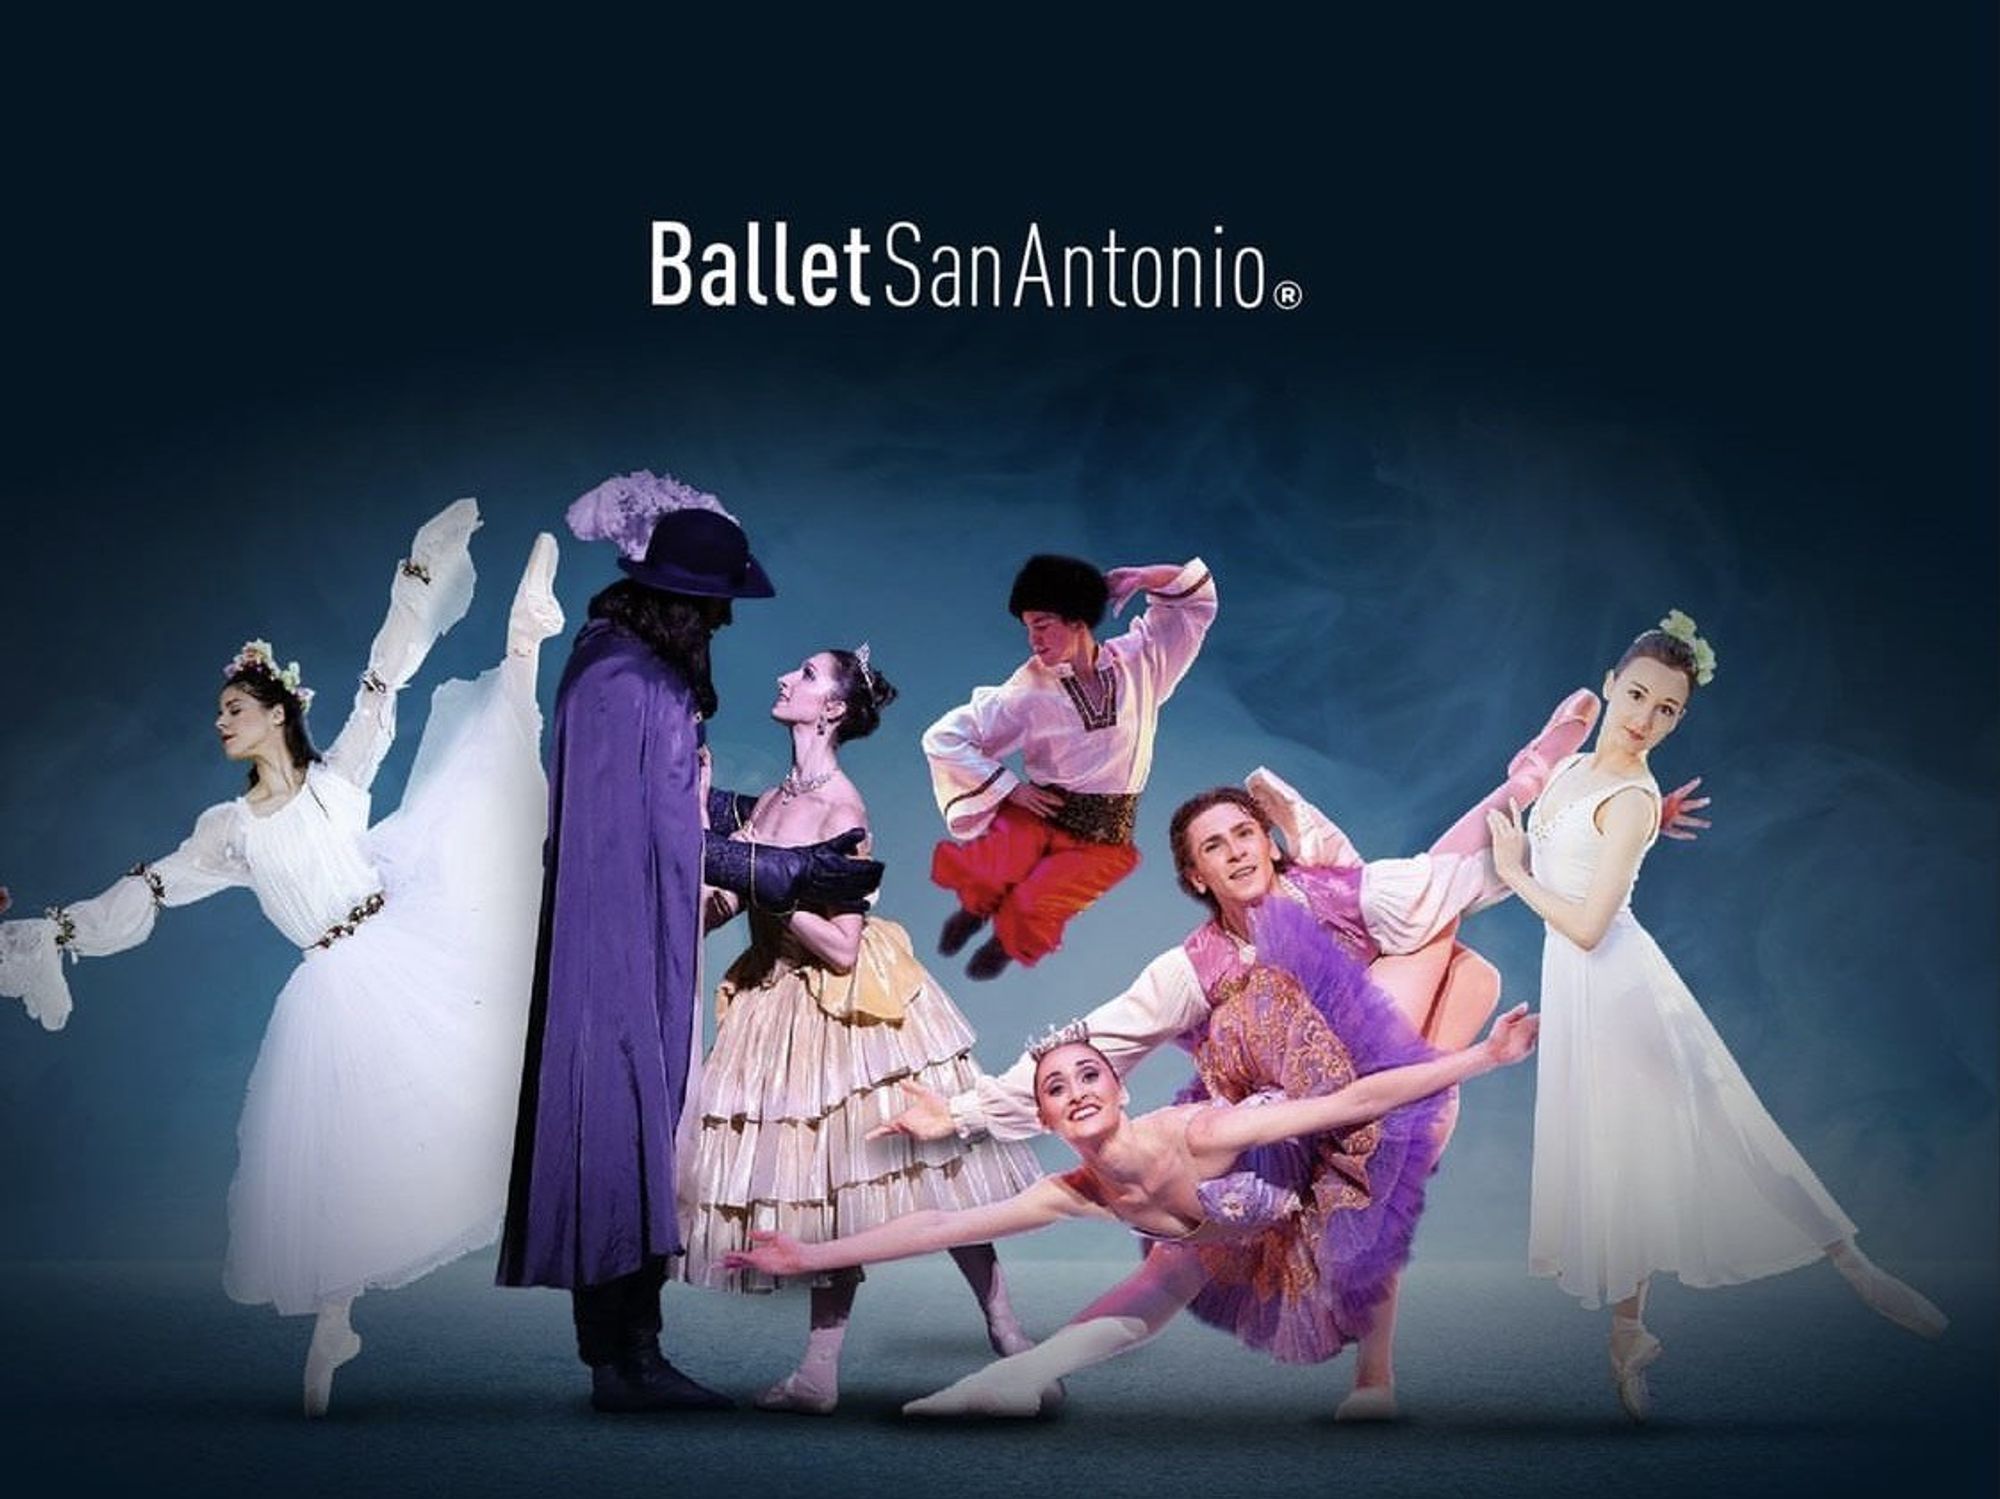 Professional ballet dancers from the Ballet San Antonio